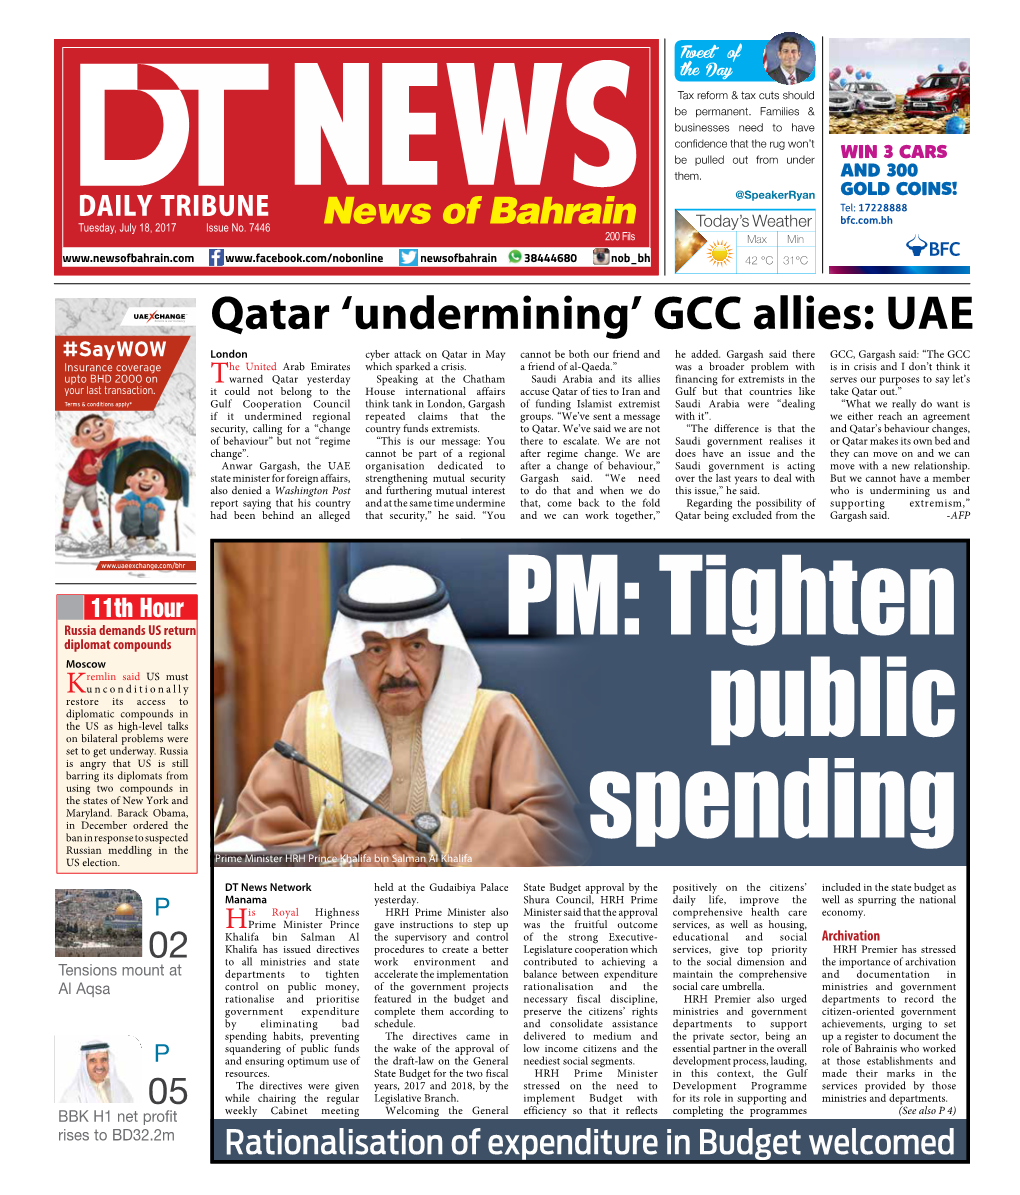 Qatar 'Undermining' GCC Allies